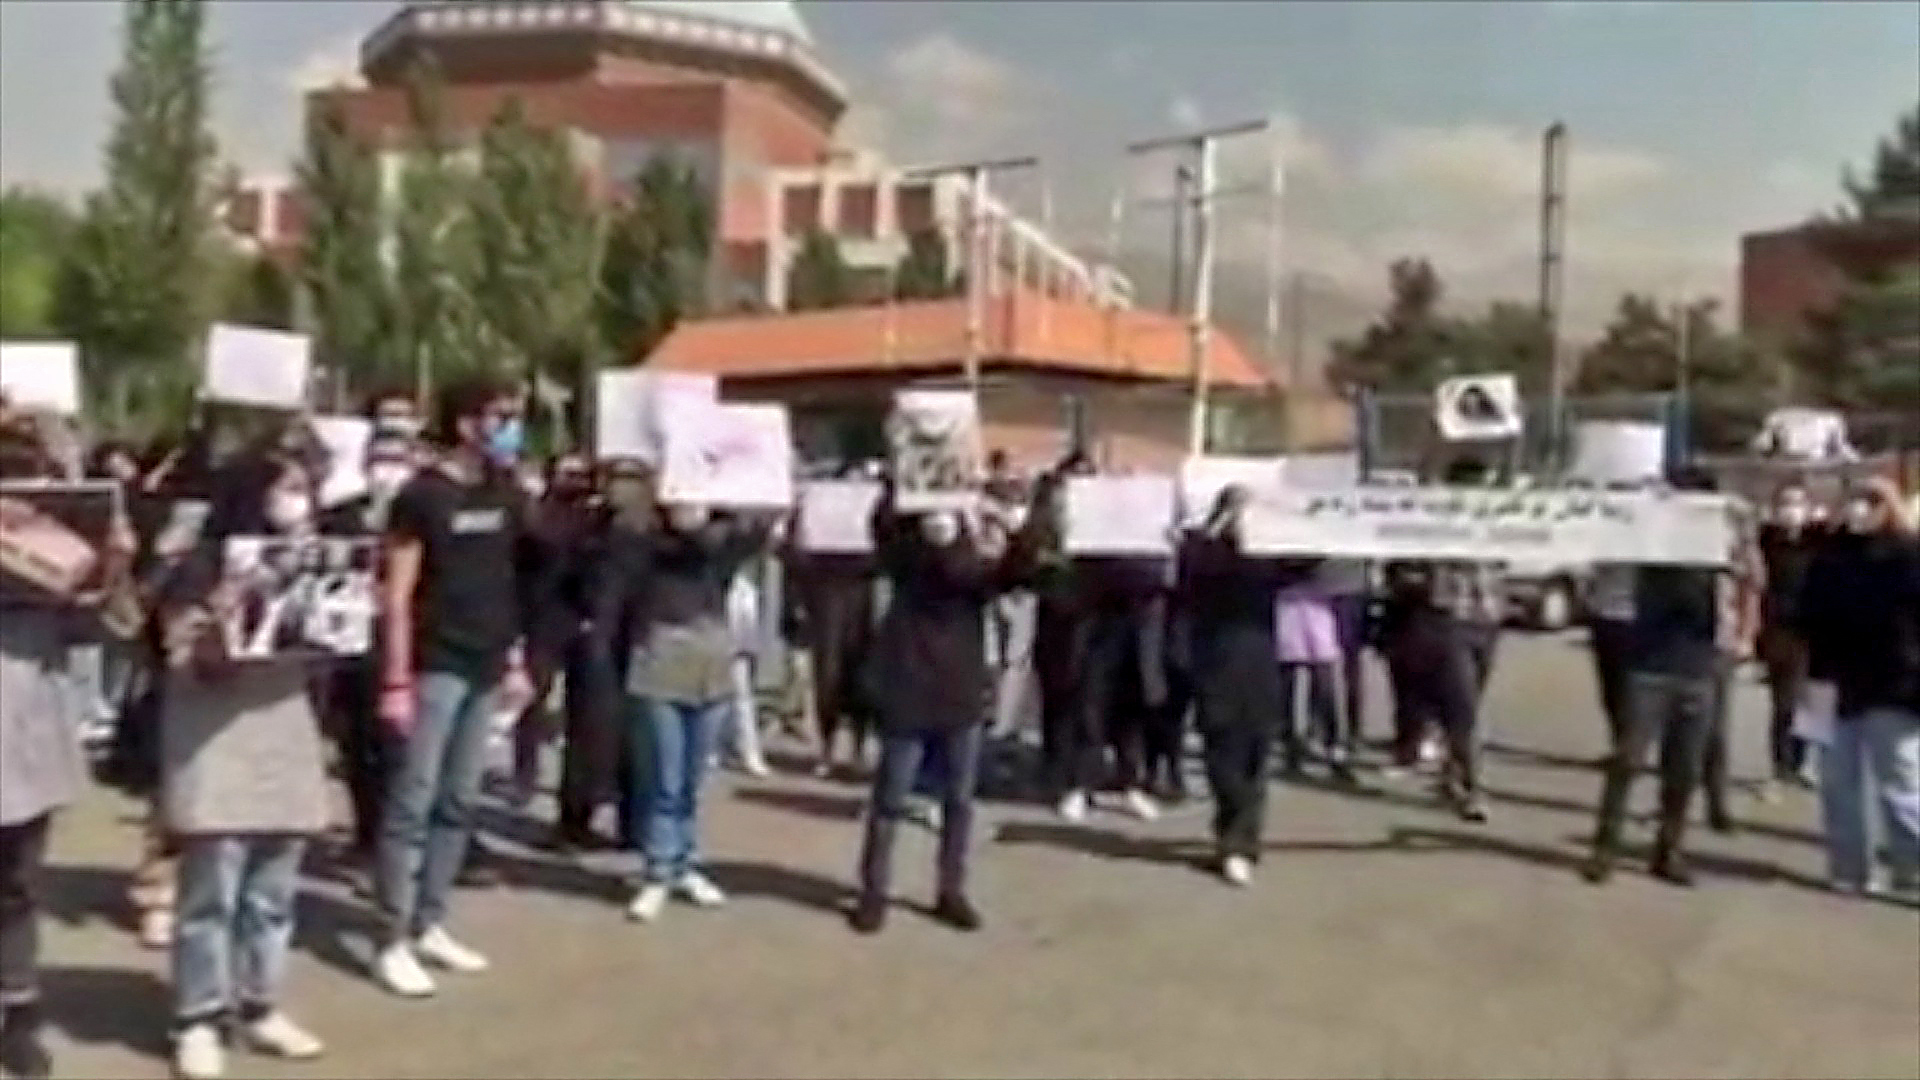 Protests at Allameh Tabataba'i University over the death of Mahsa Amini.